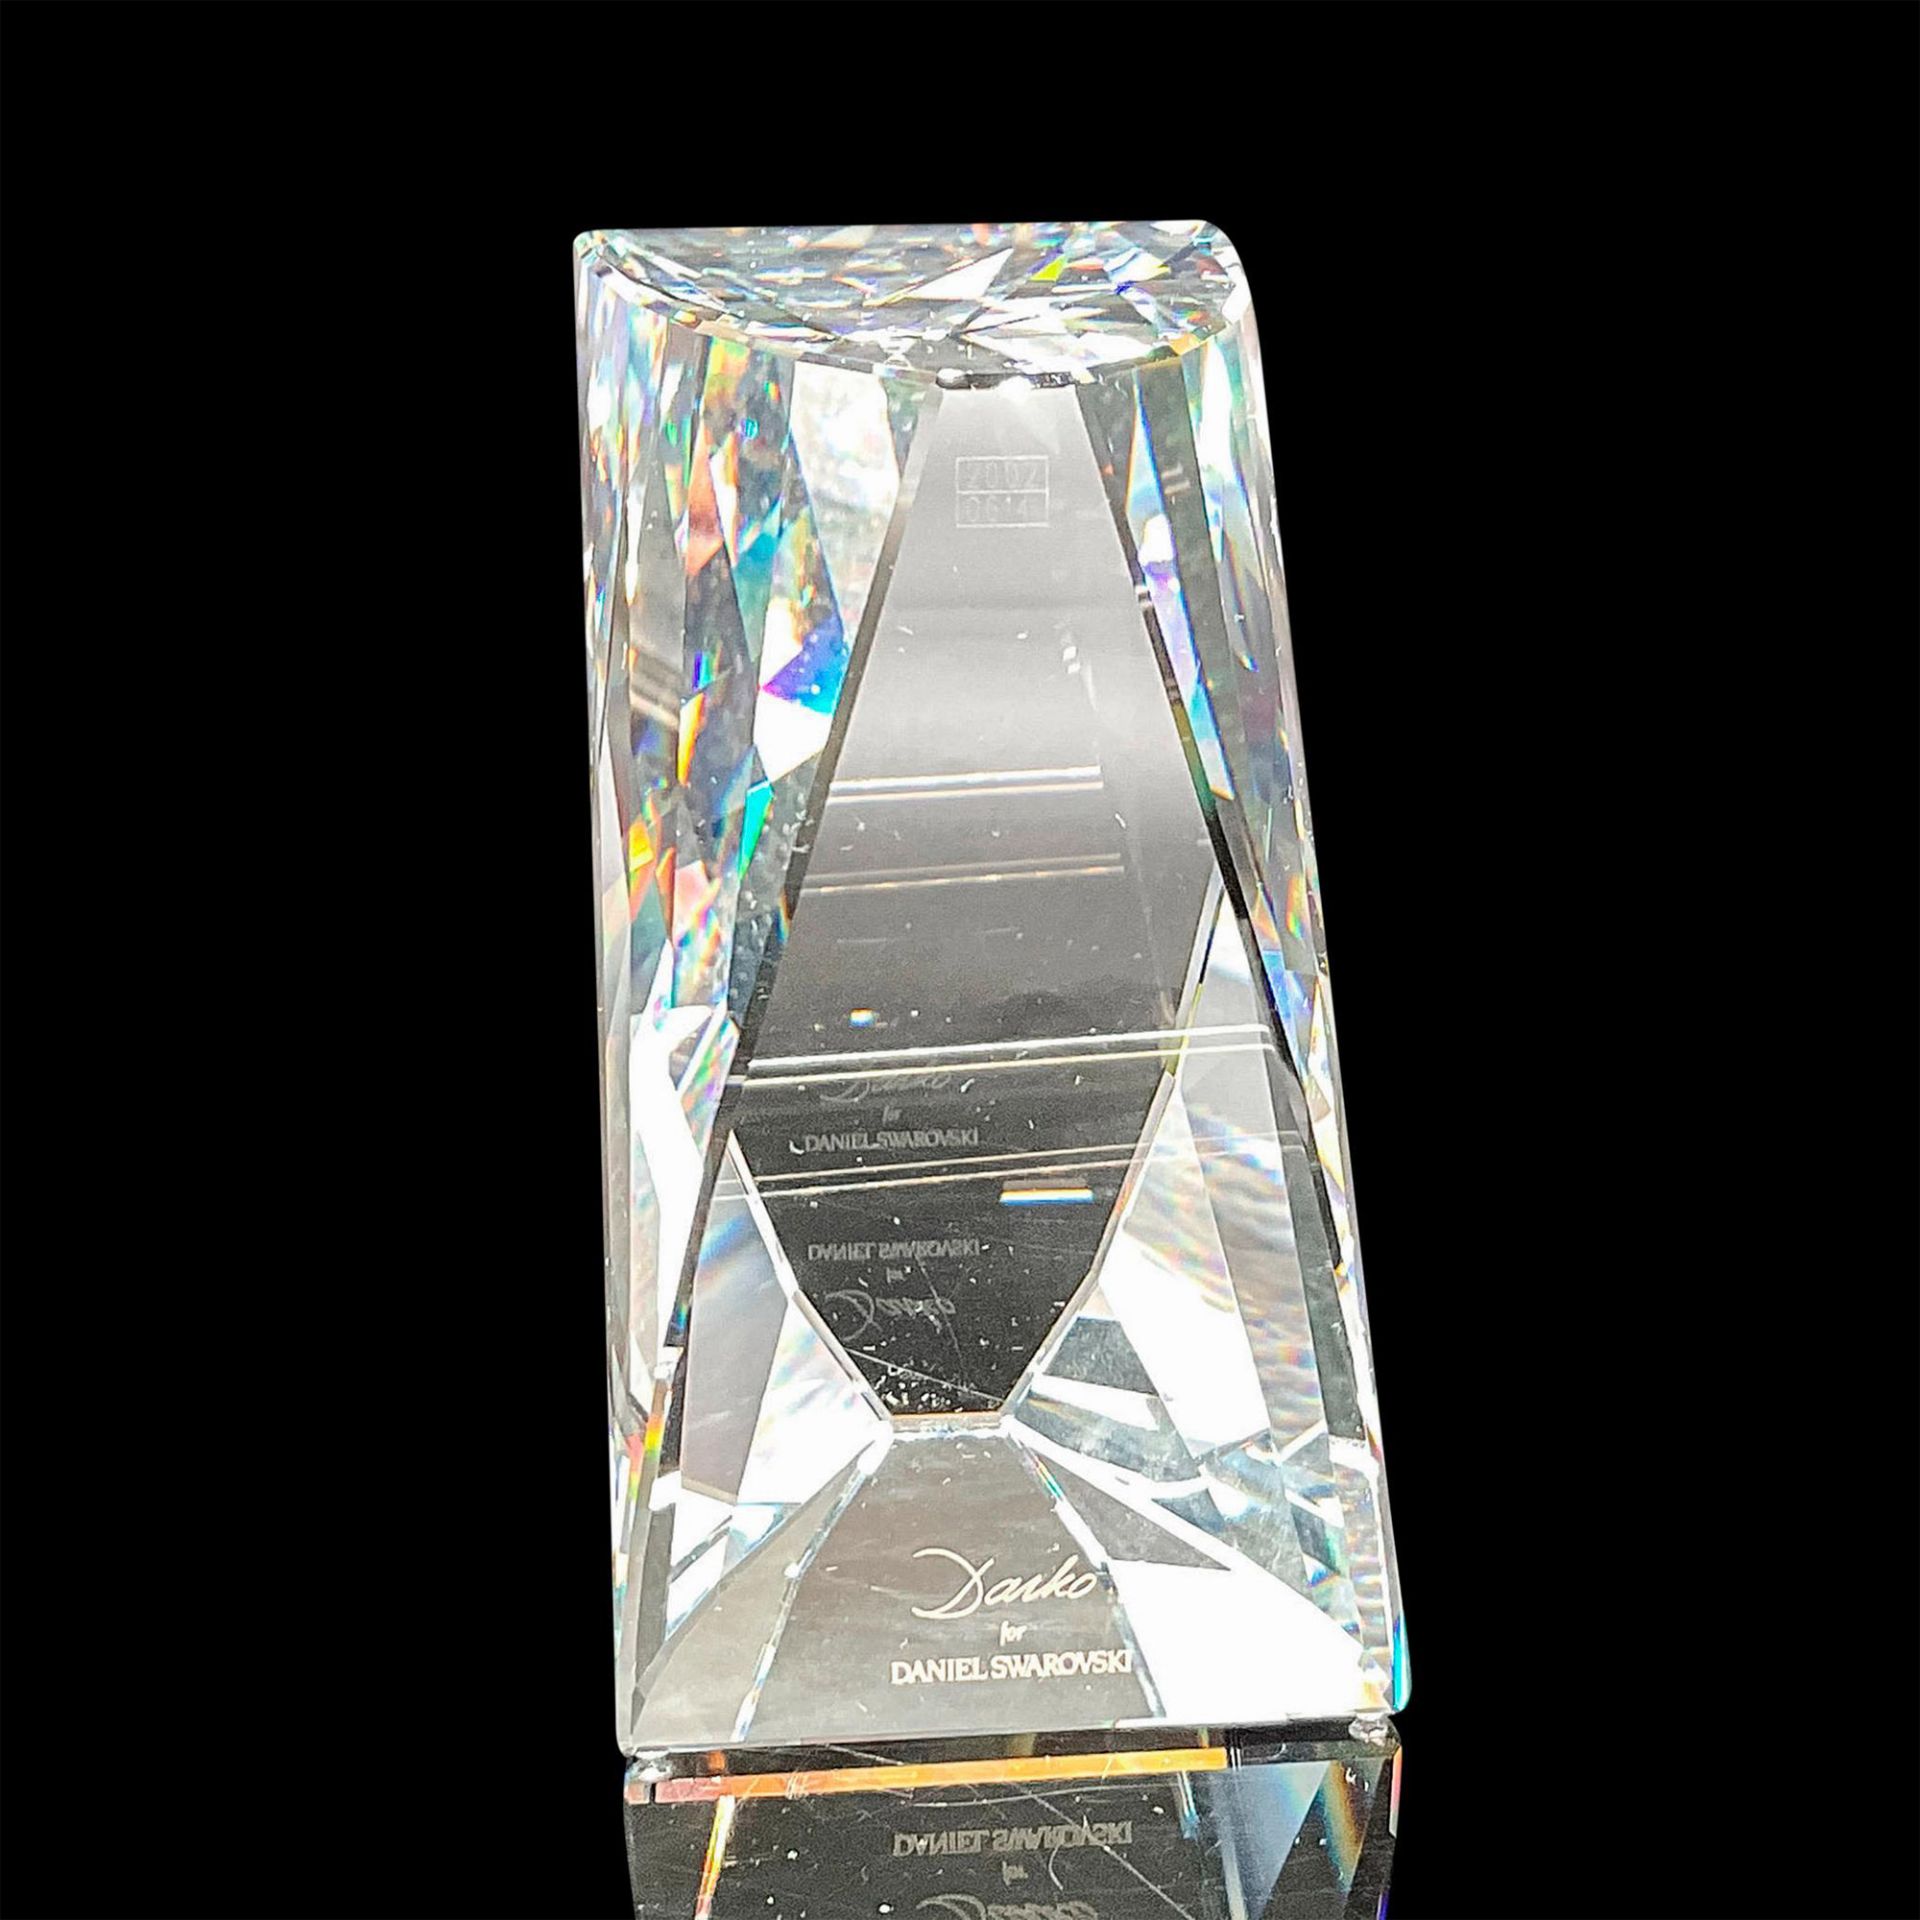 Swarovski by Daniel Swarovski Crystal Paperweight, The Ray - Image 2 of 3